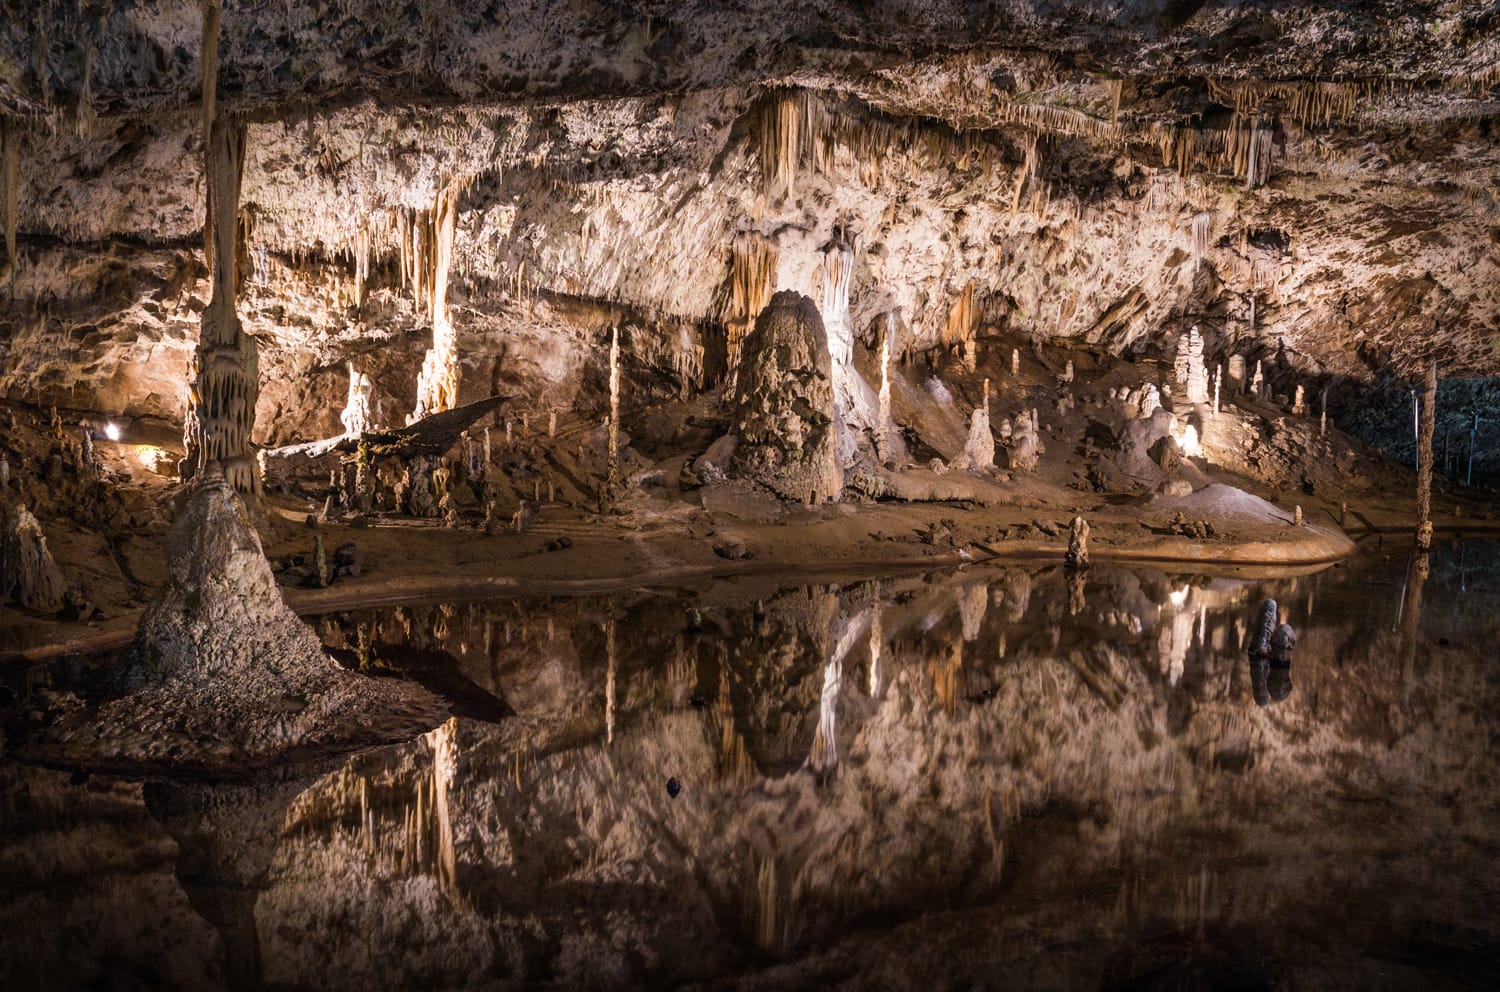 Punkevni Cave in Moravian Karst, Czech Republic